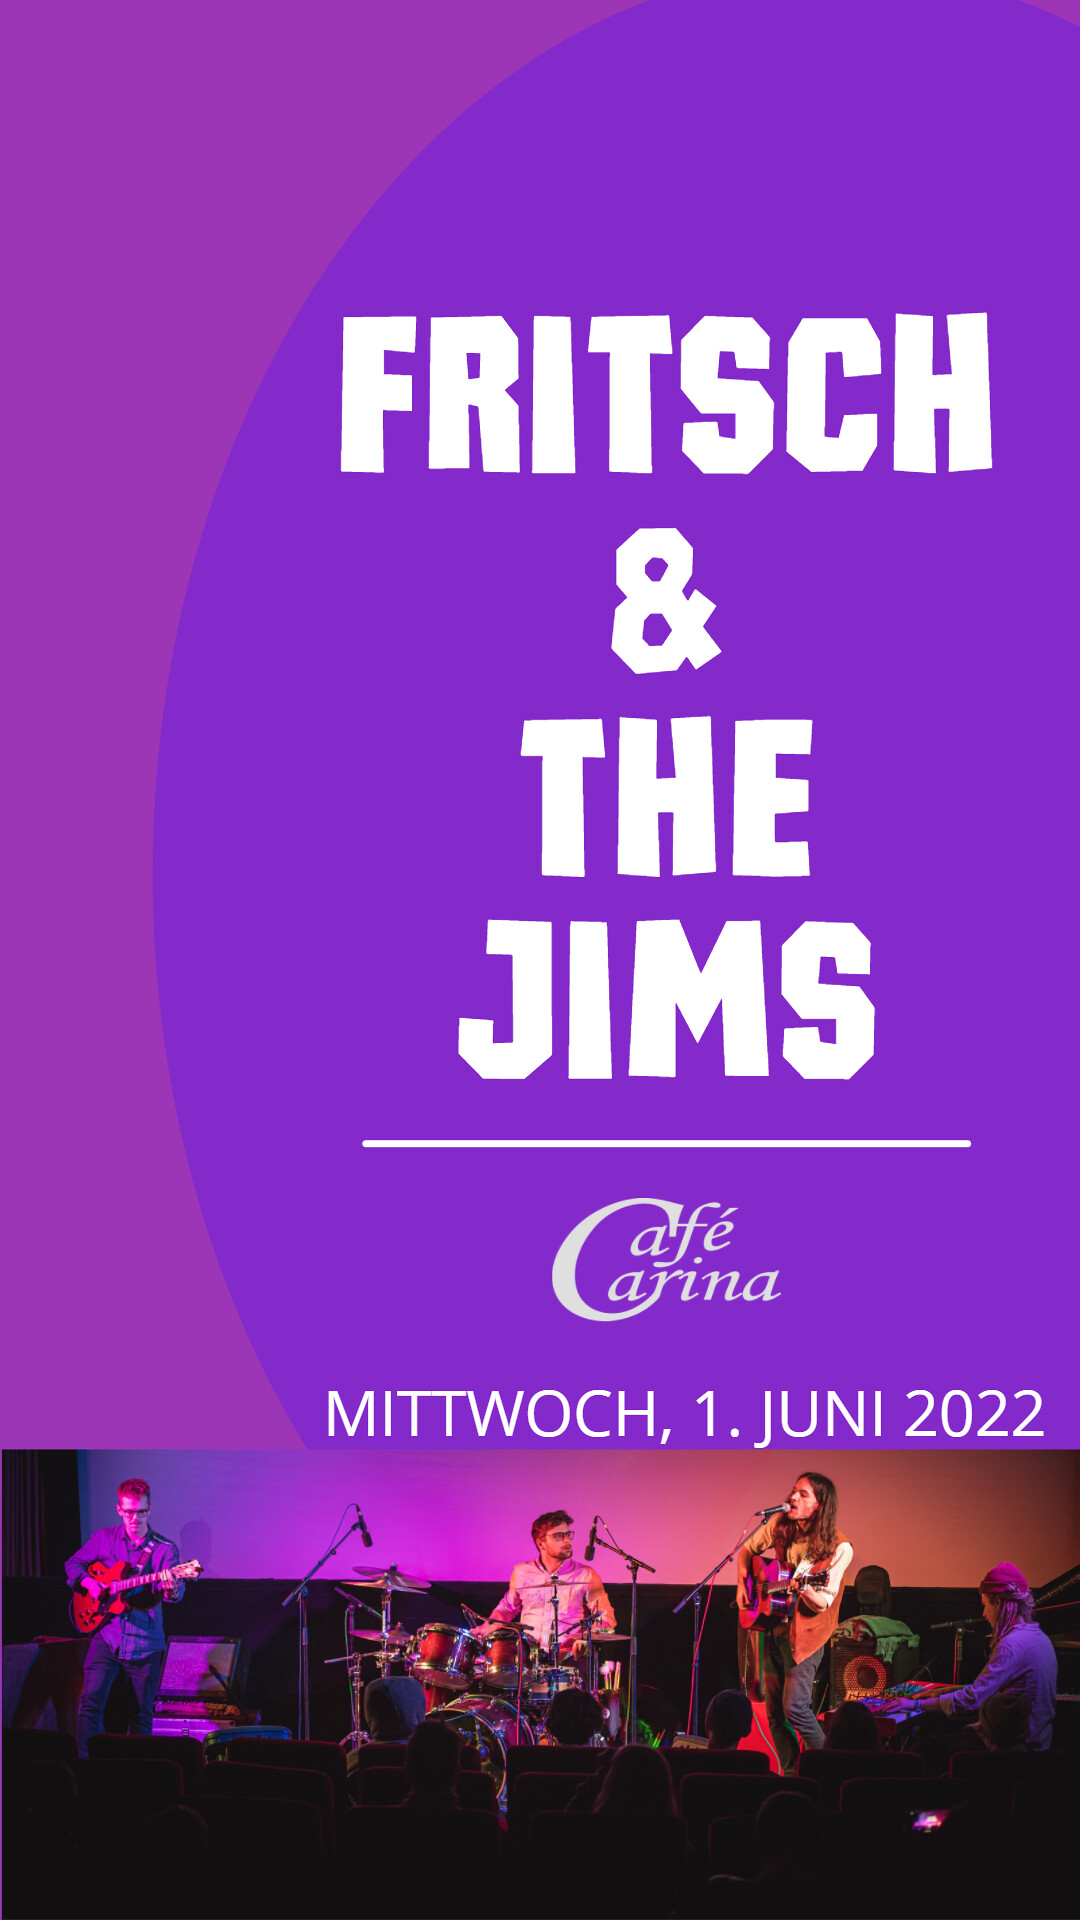 Fritsch & The Jims